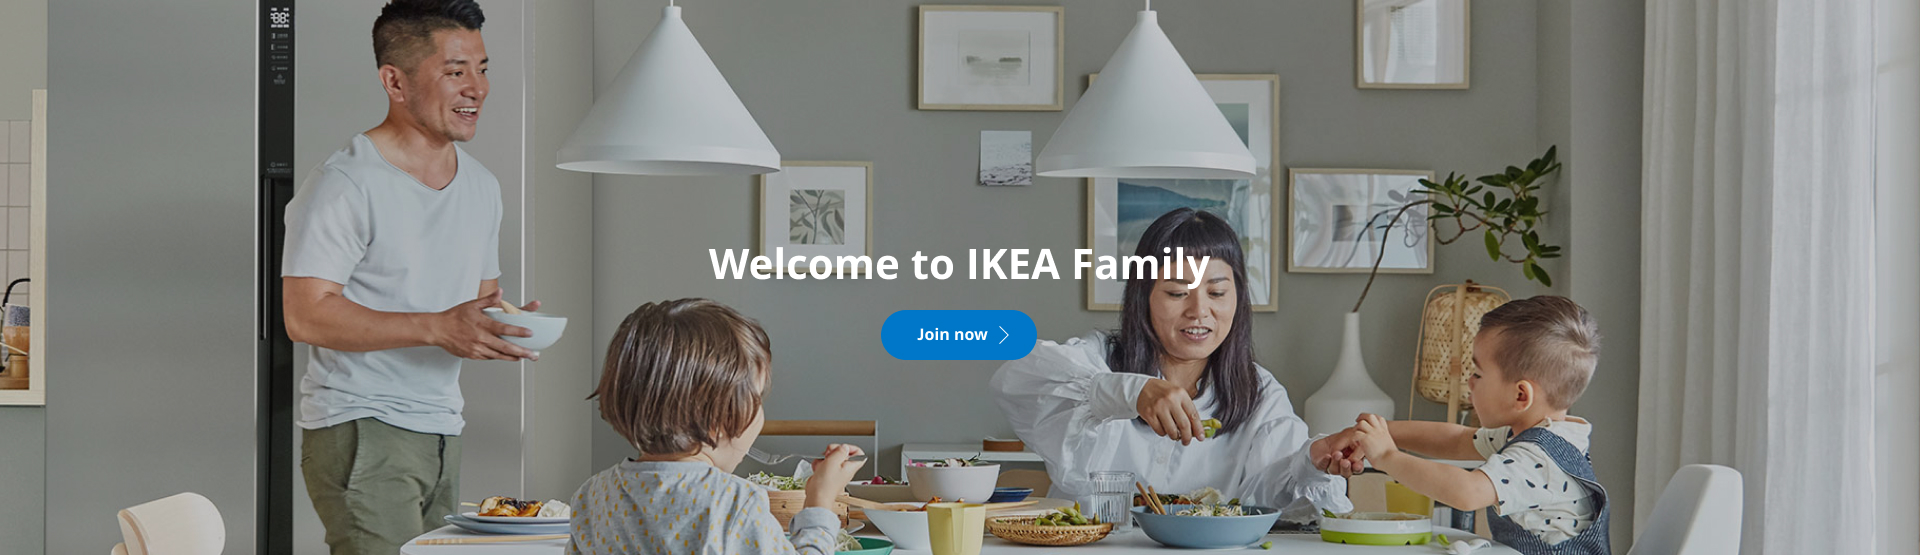 IKEA Family Thailand - IKEA Family Registration banner